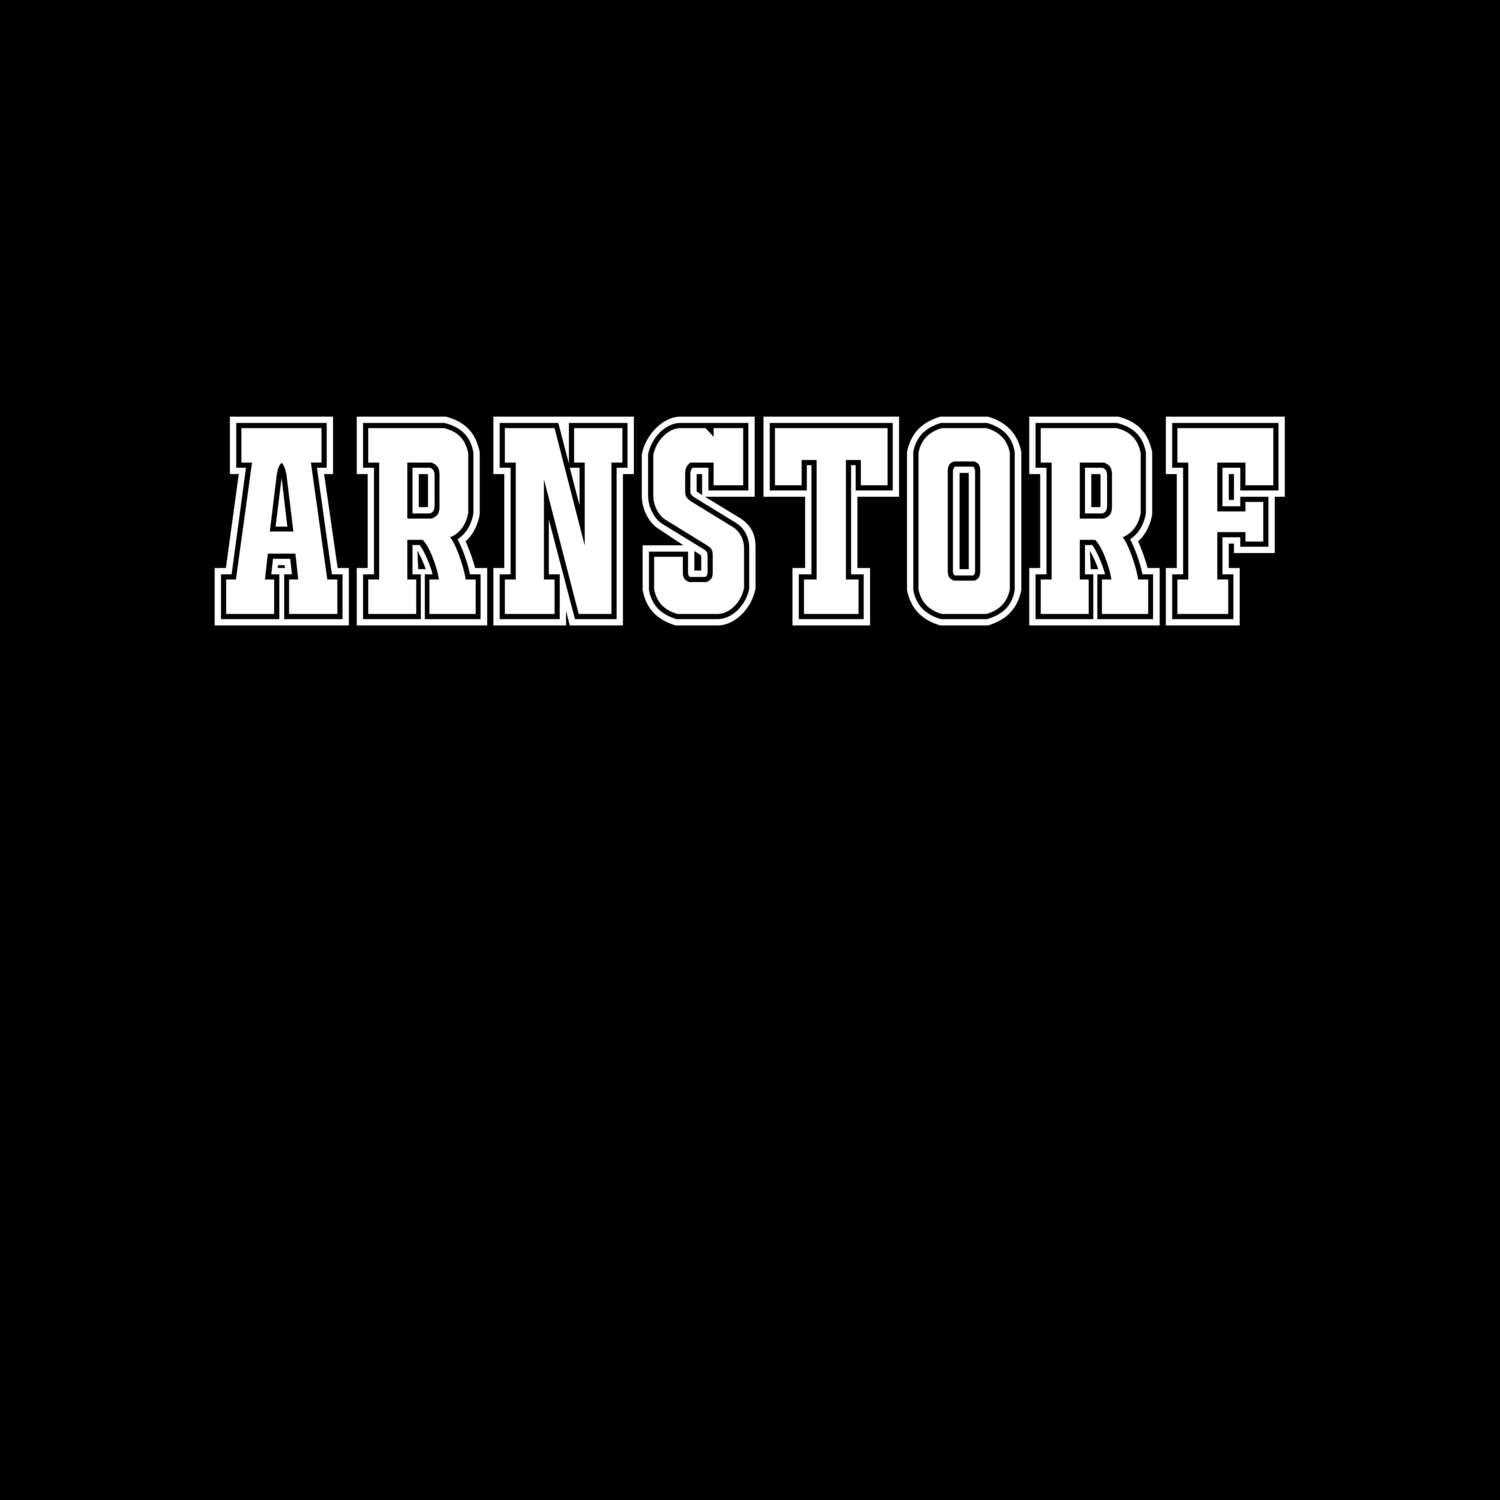 Arnstorf T-Shirt »Classic«